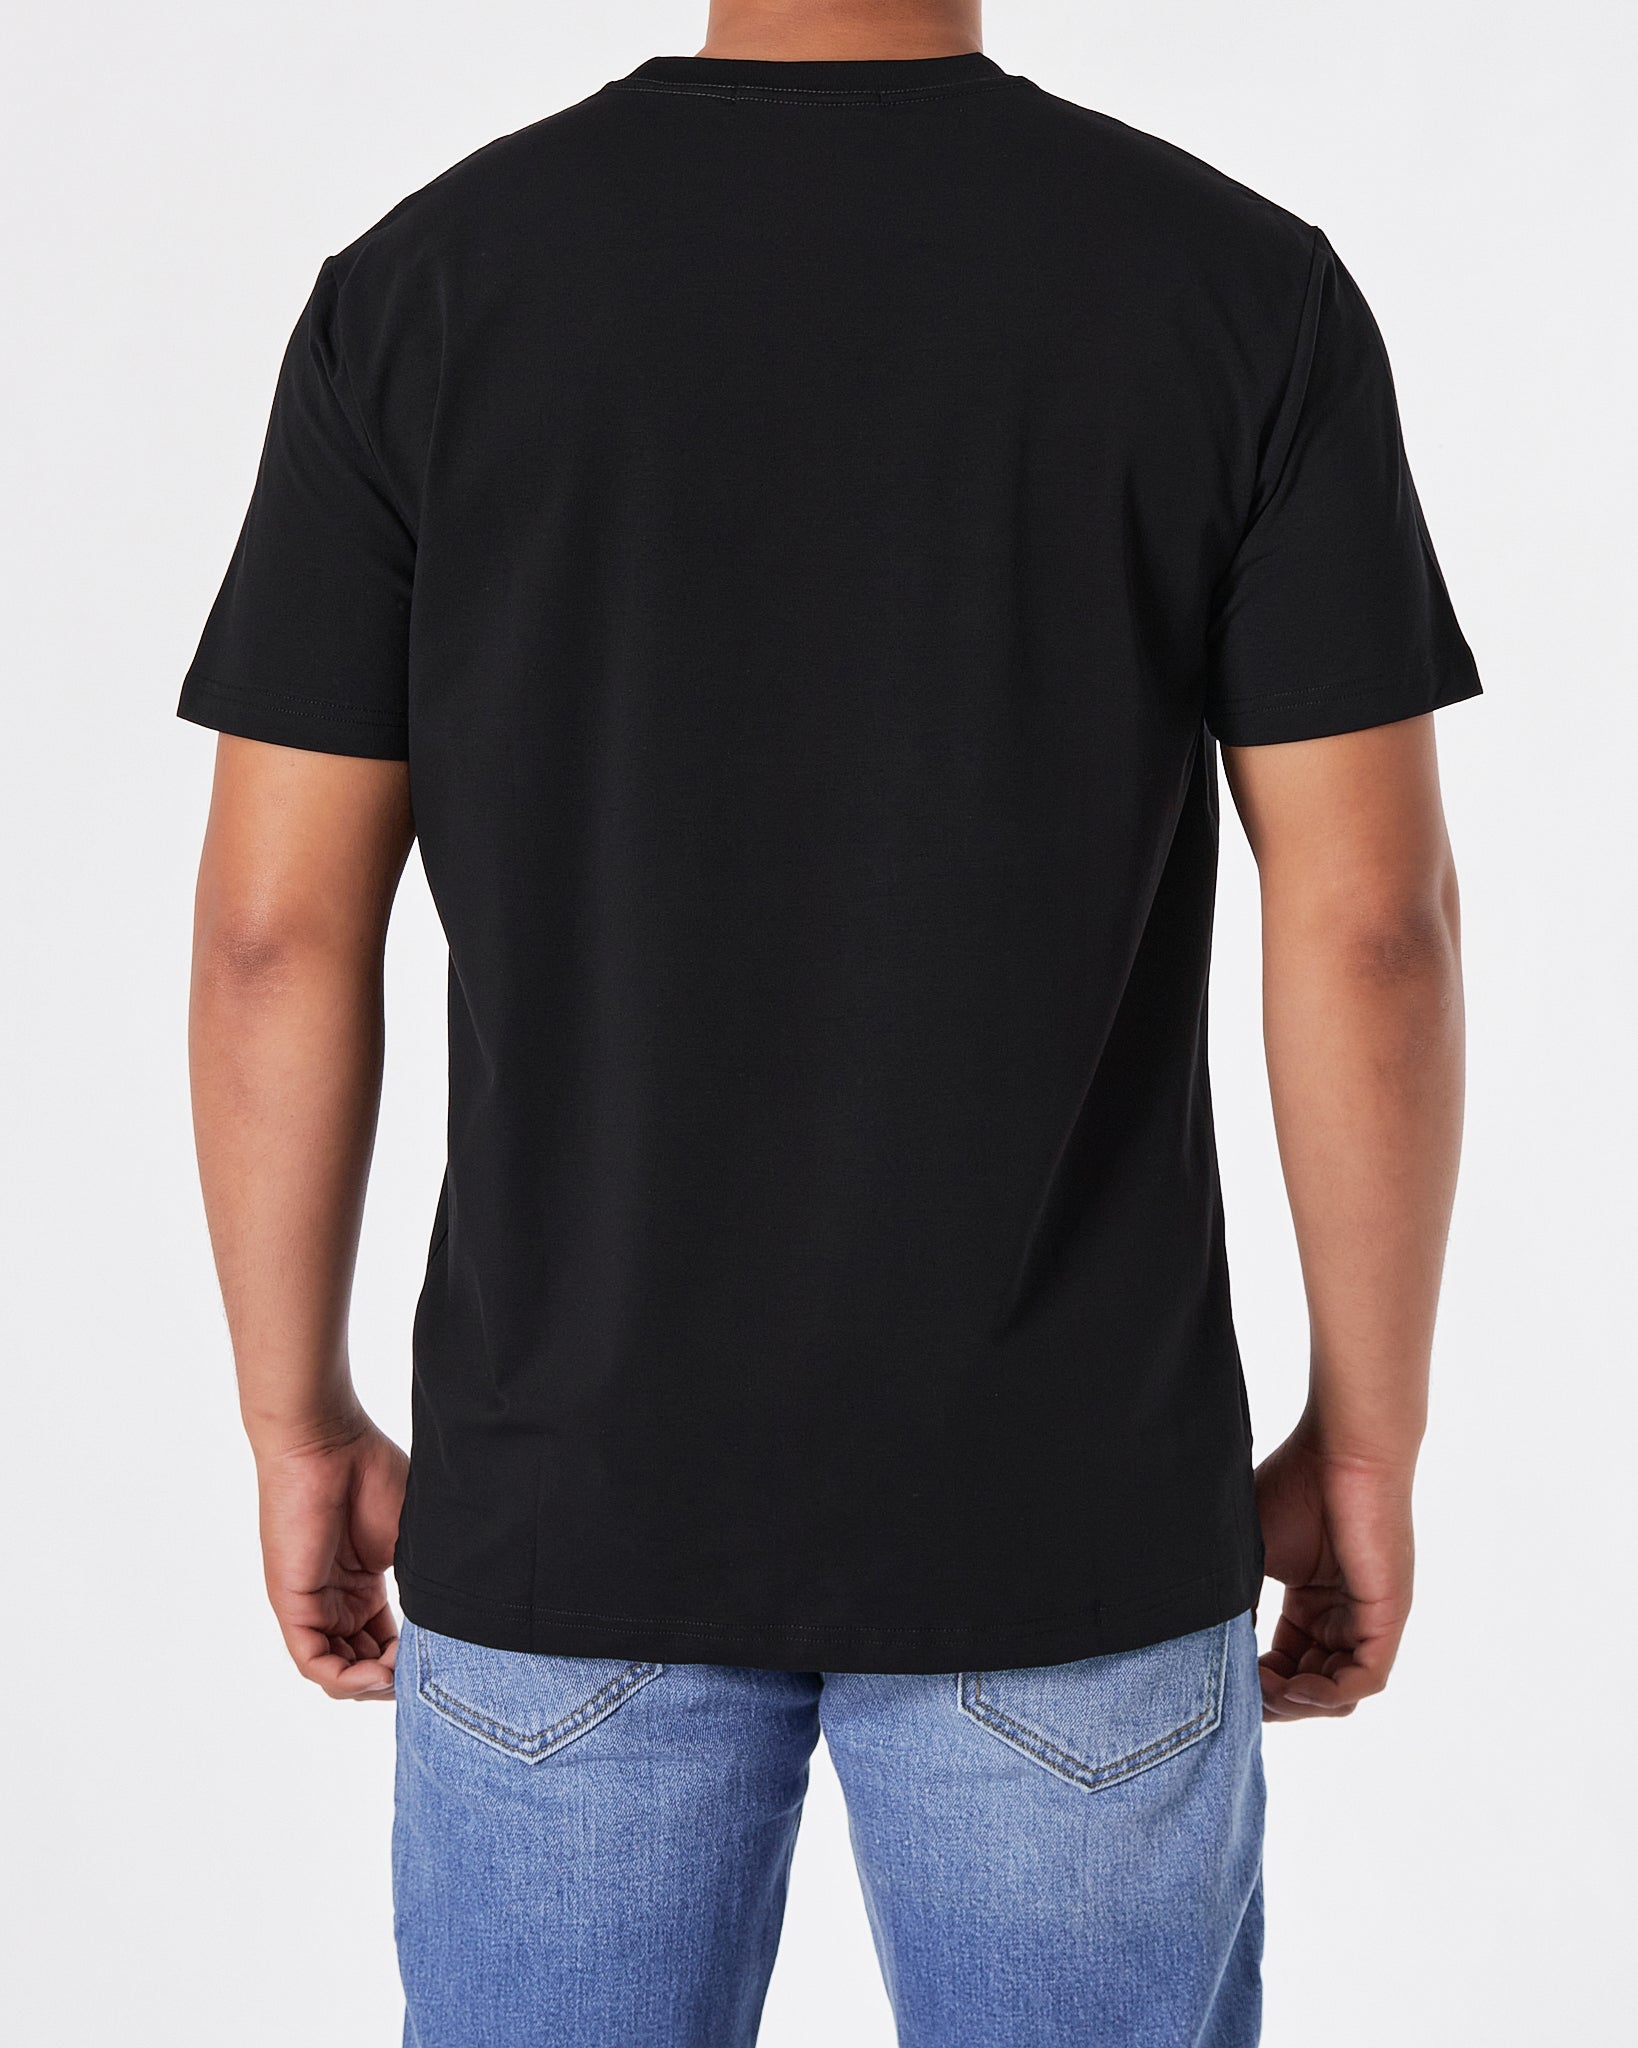 ARM Logo Printed Men Black T-Shirt 17.90